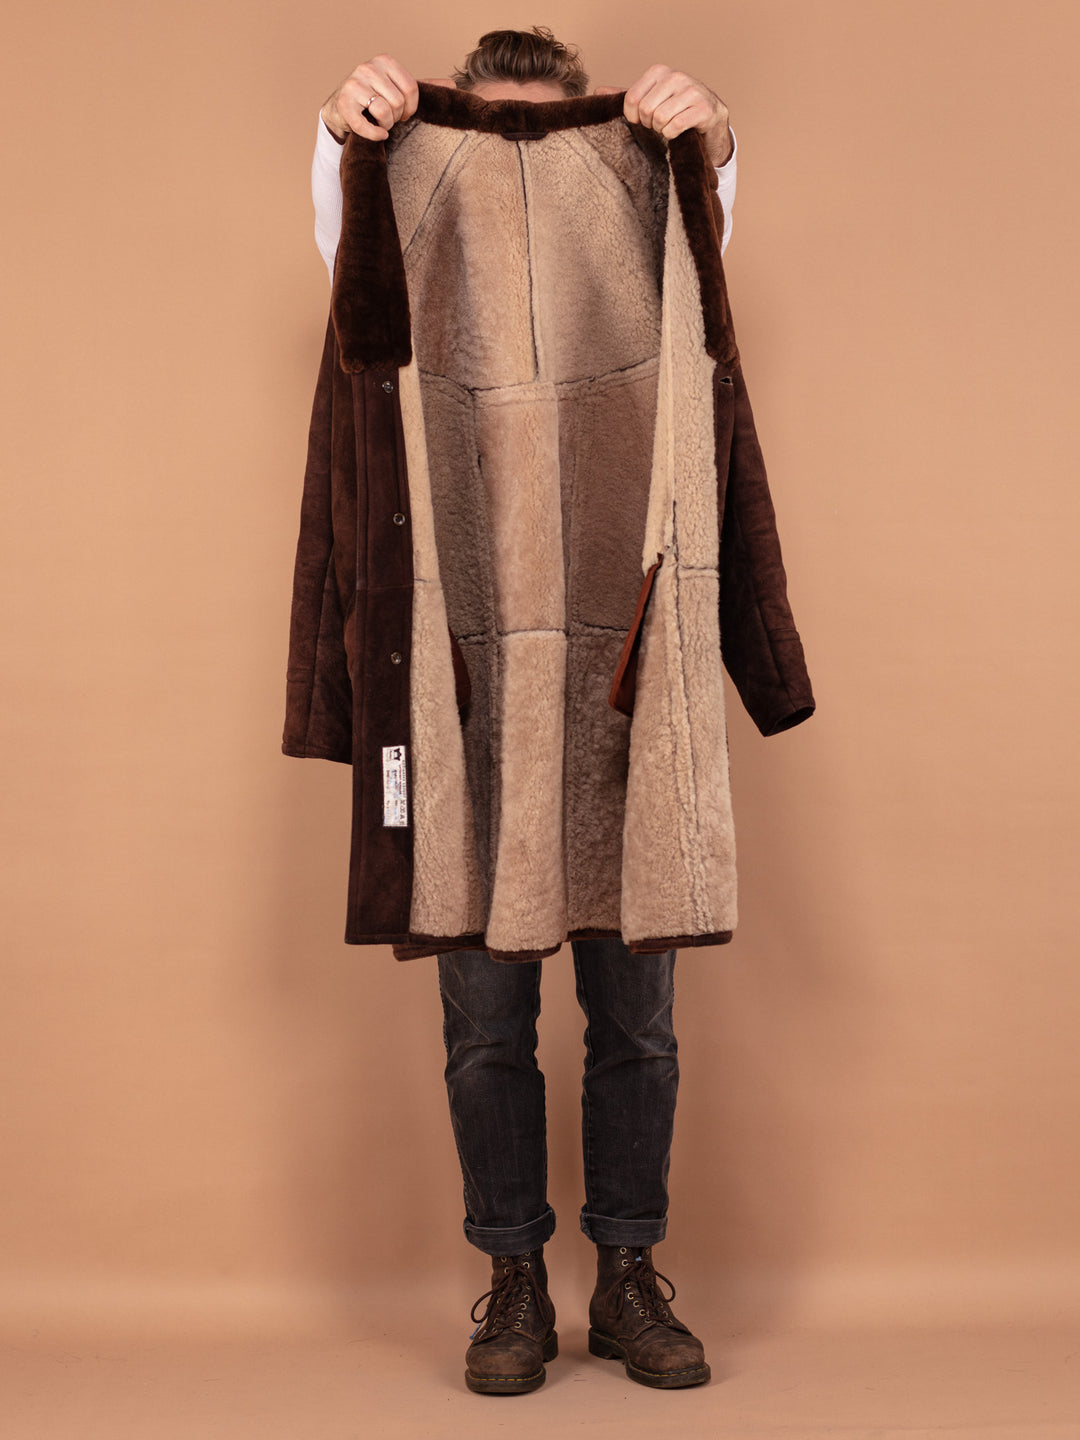 Heavy Sheepskin Coat 70's, Size L Large, Vintage Long Heavyweight Overcoat, Men Brown Suede Coat with Belt, Warm Winter Outfit, Outerwear